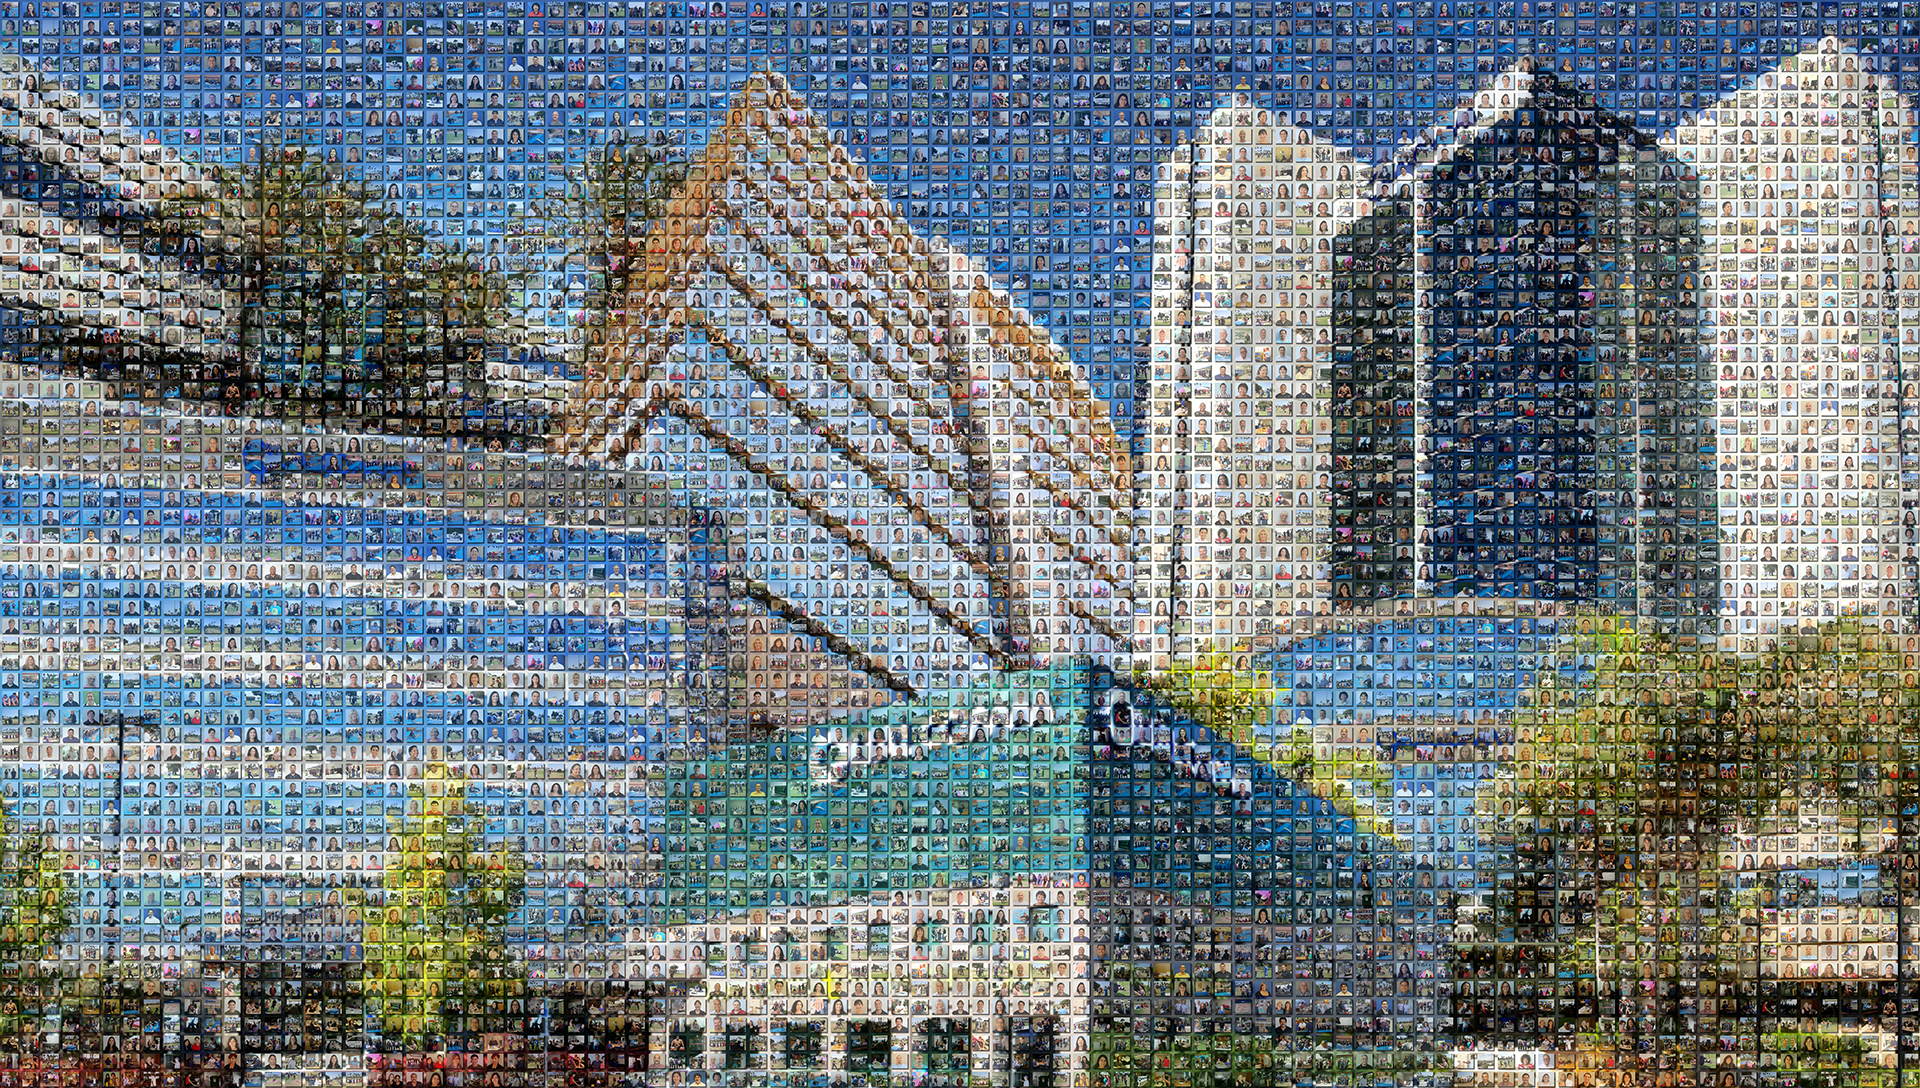 photo mosaic created using 761 employee photos